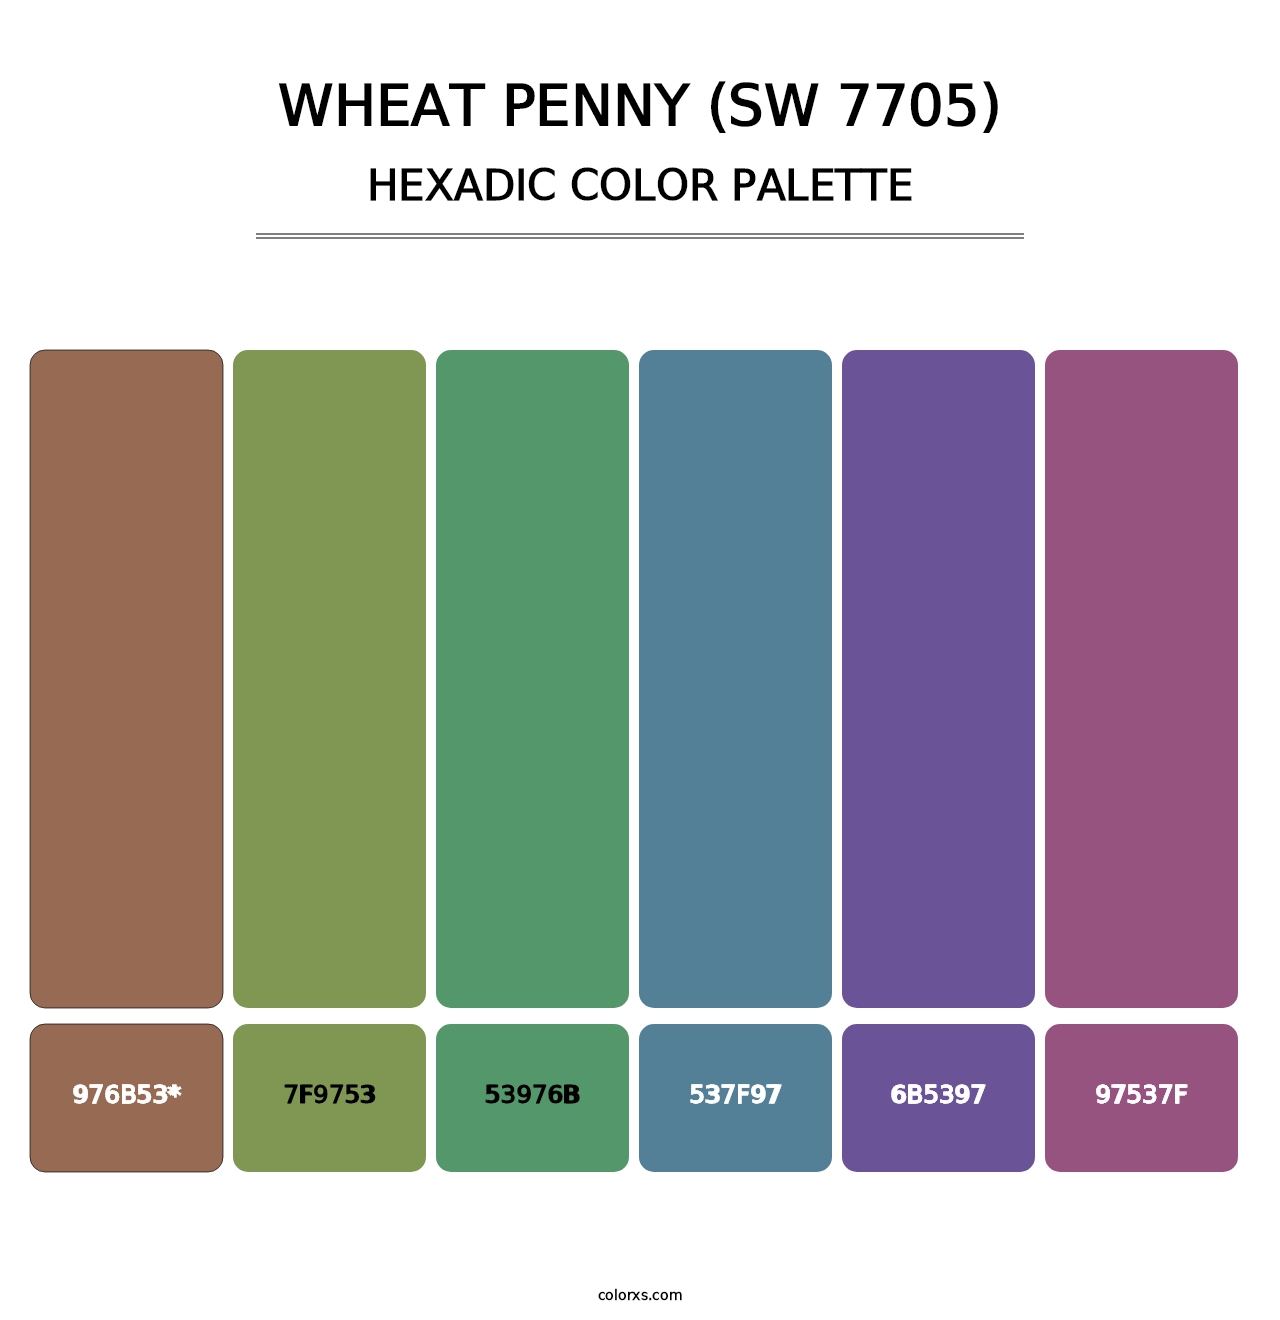 Wheat Penny (SW 7705) - Hexadic Color Palette